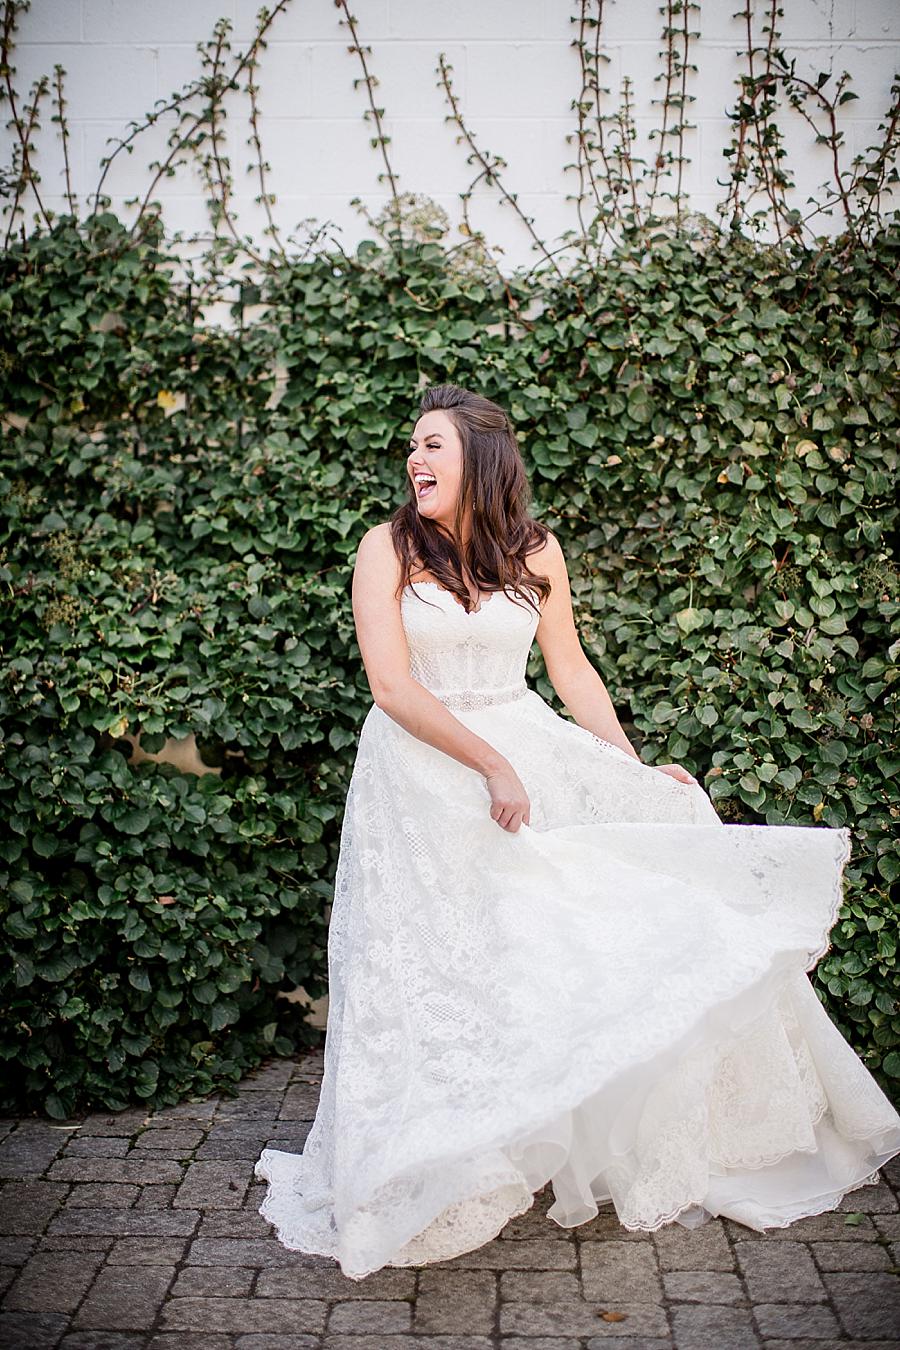 Ivy wall at this bridal session by Knoxville Wedding Photographer, Amanda May Photos.